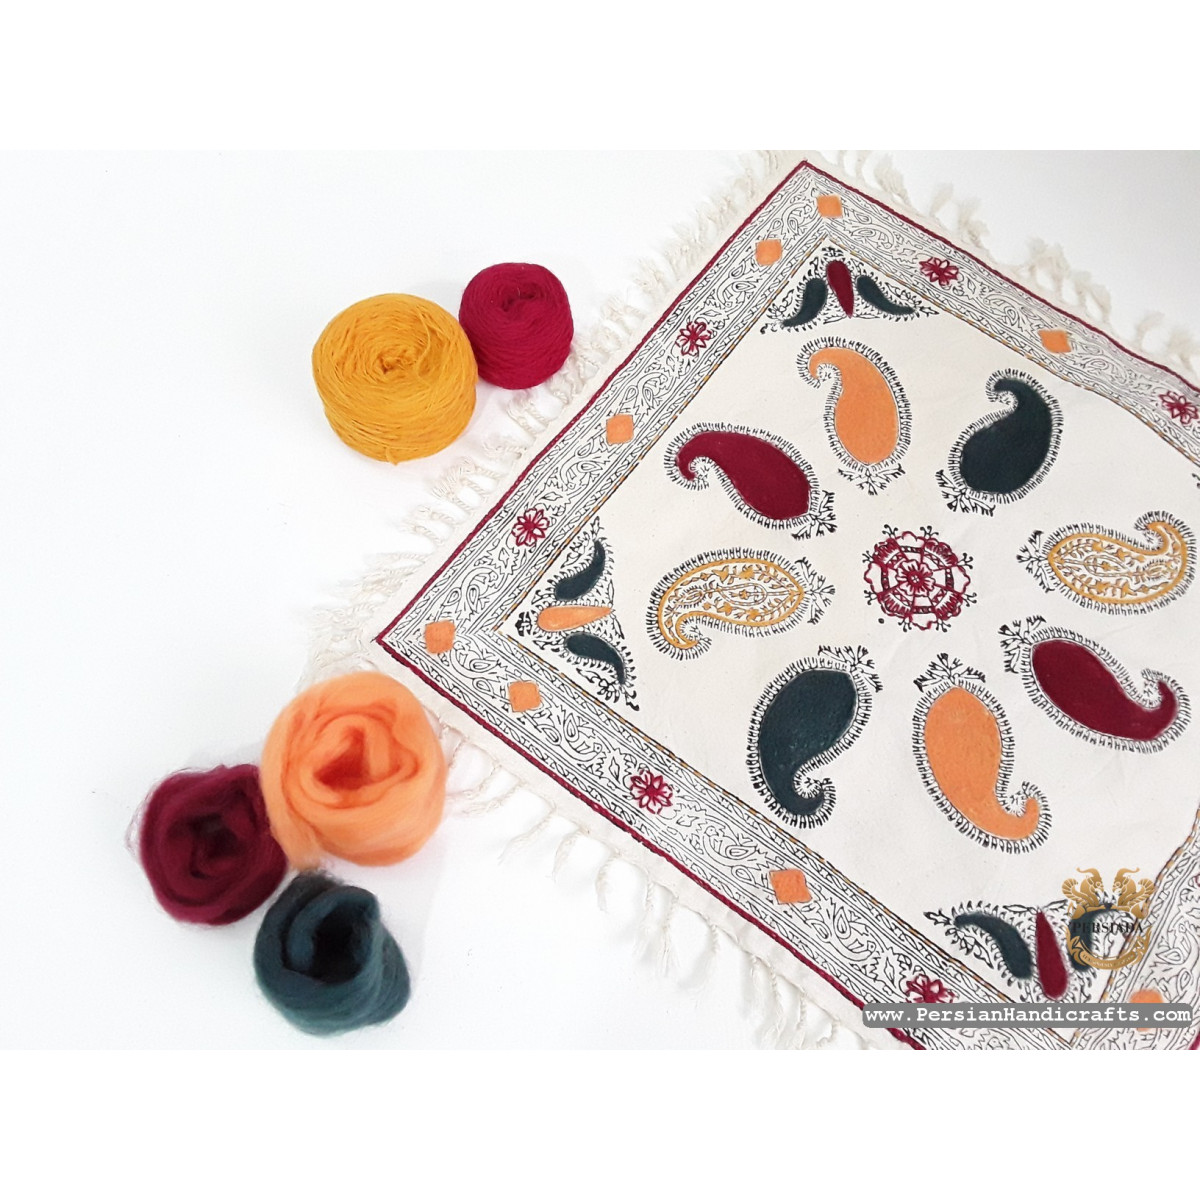 Square Tablecloth | Handmade Organic Cotton | PHGH612-Persian Handicrafts